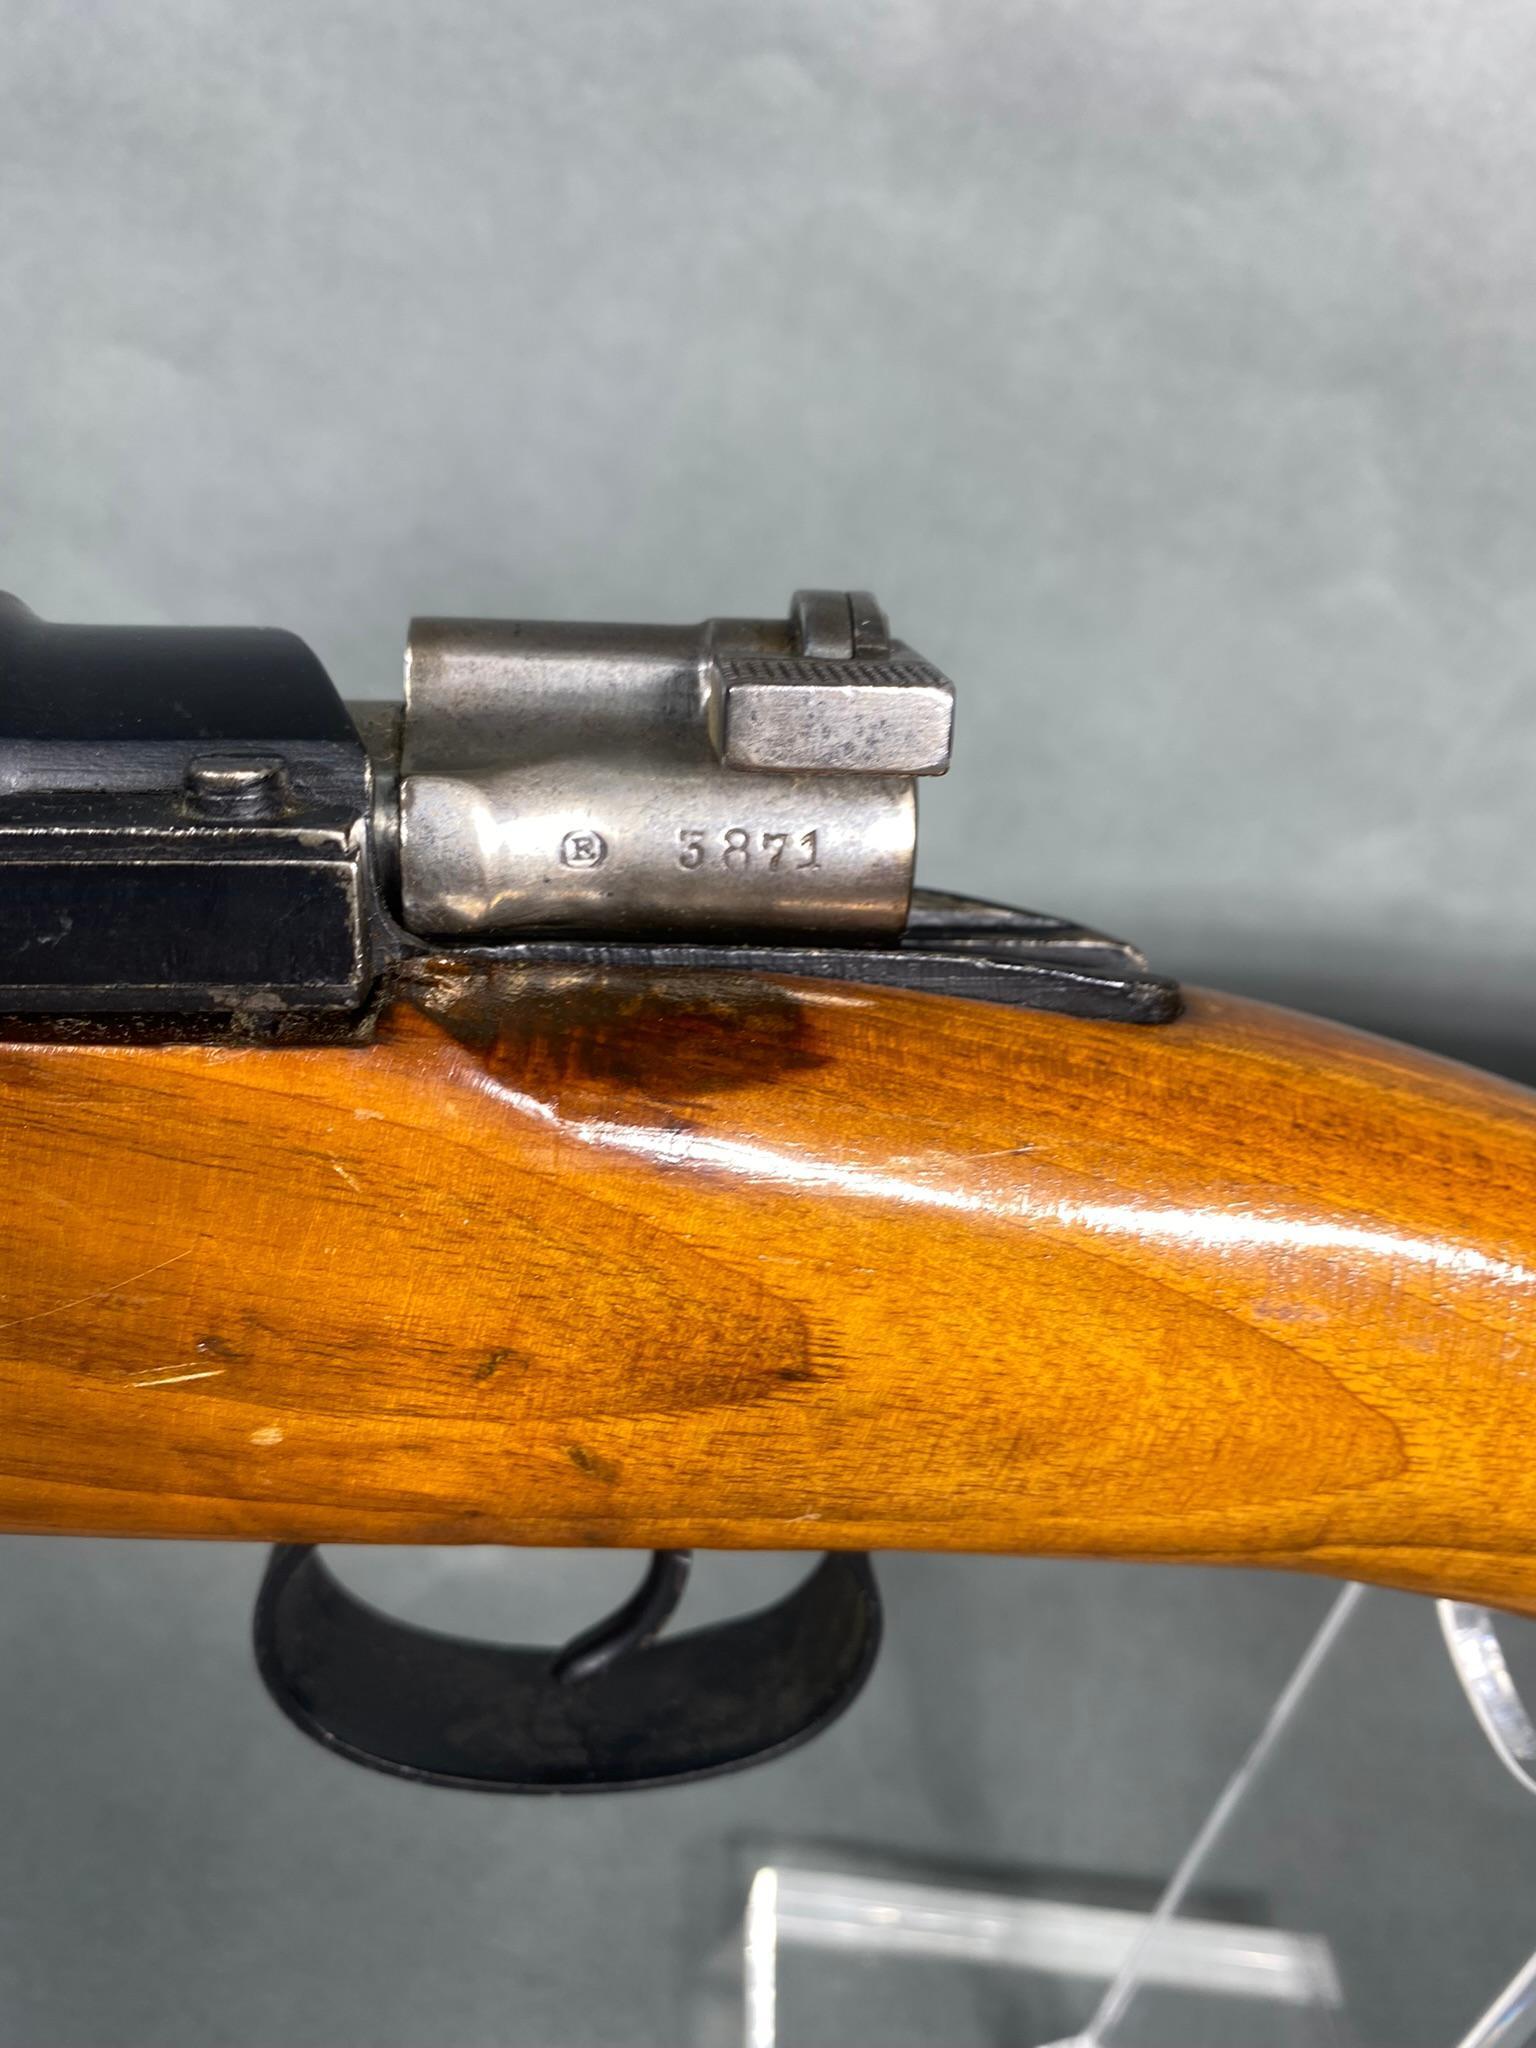 Vintage Sporterized German Rifle Gewehr 98 Interarms